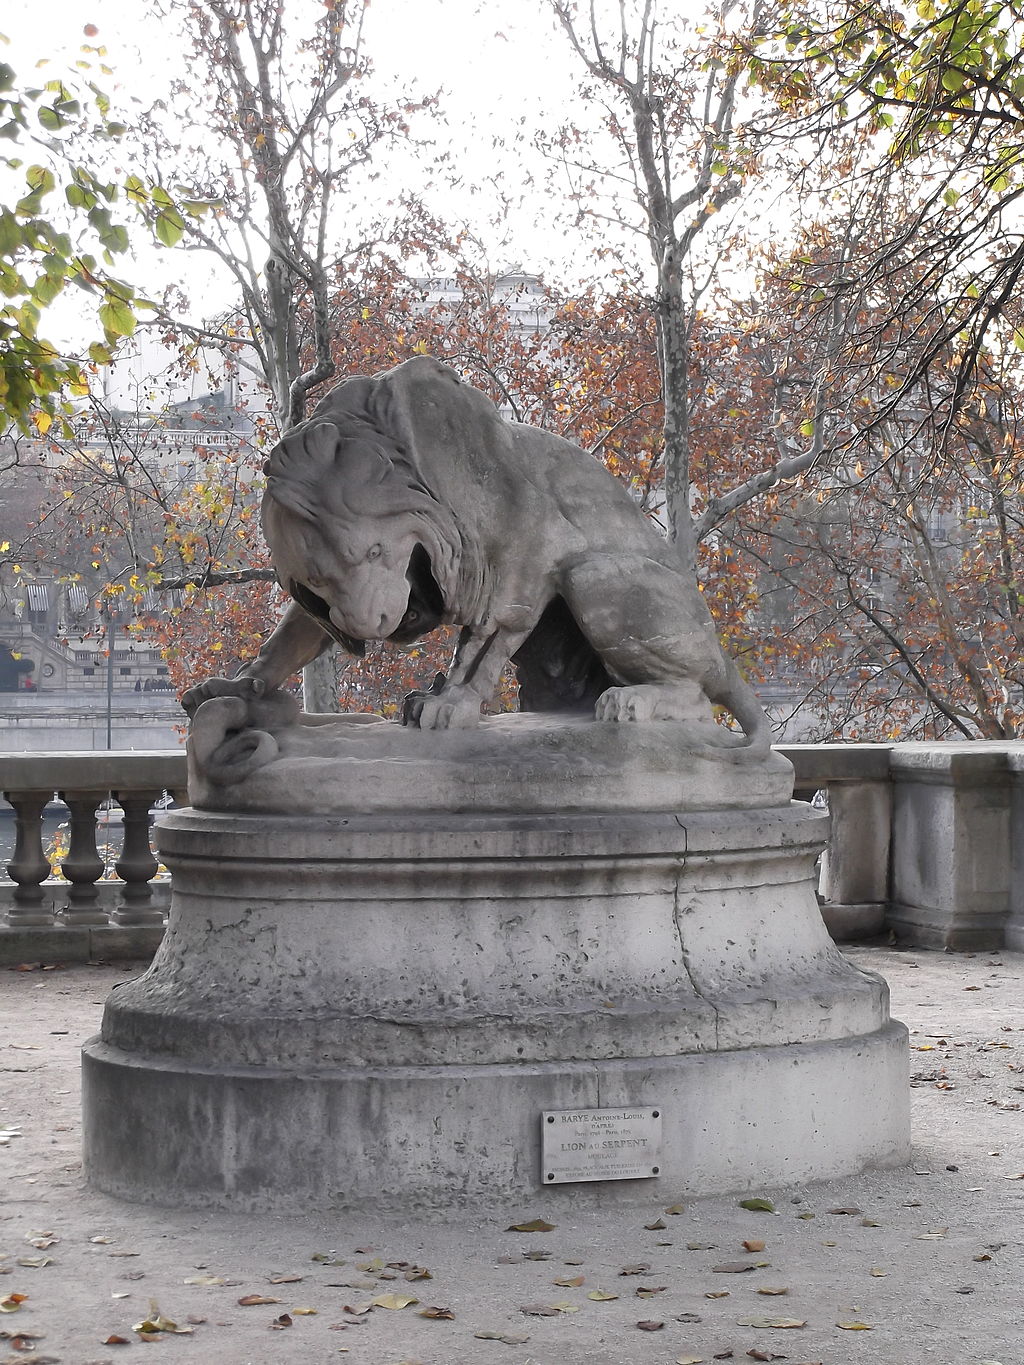 Phiên bản tác phẩm "Lion au serpent" bằng đá tại Jardin des Tuileries, Paris